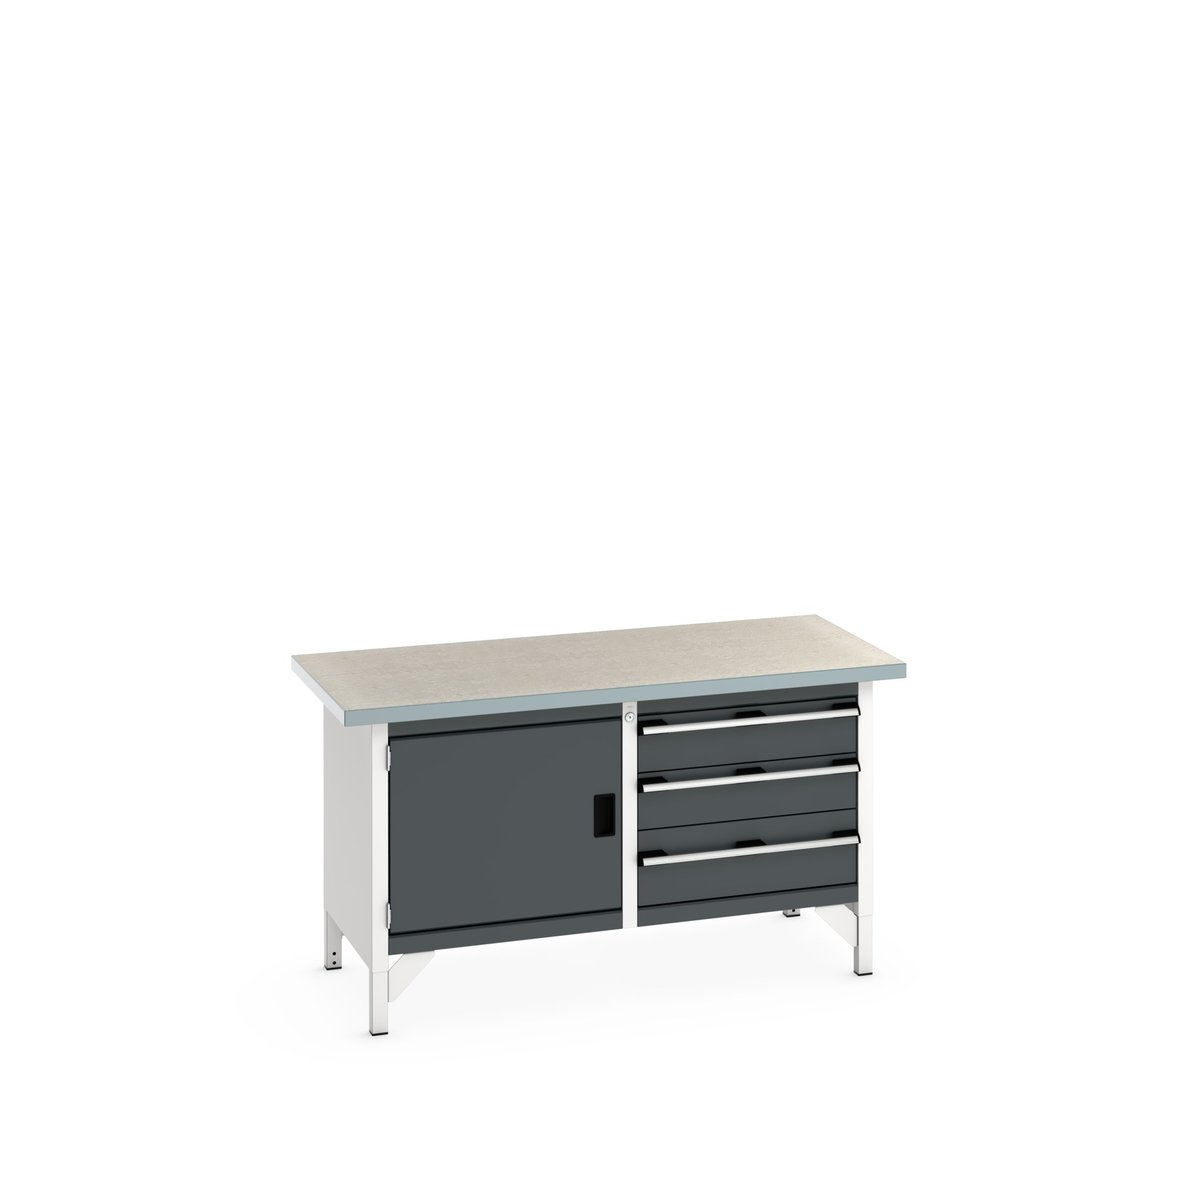 41002027. - cubio storage bench (lino)